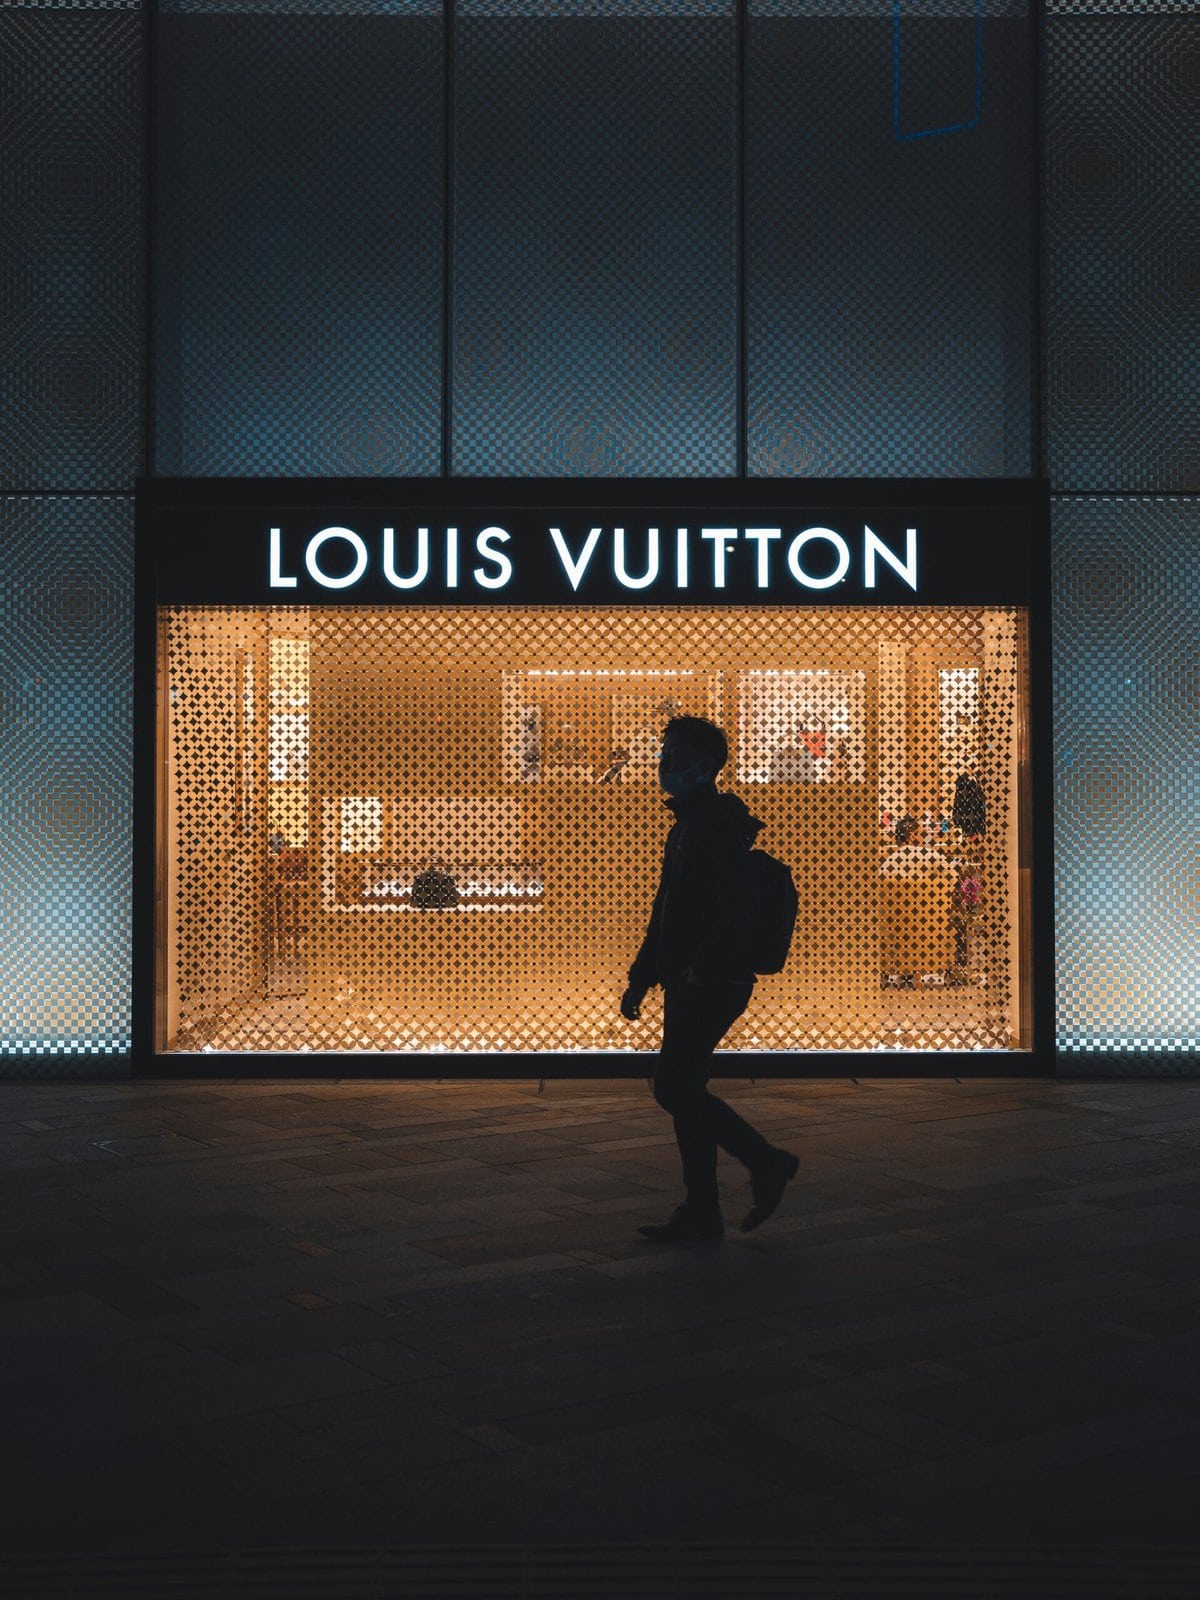 Louis Vuitton Tokyo travel guide : r/Tokyo